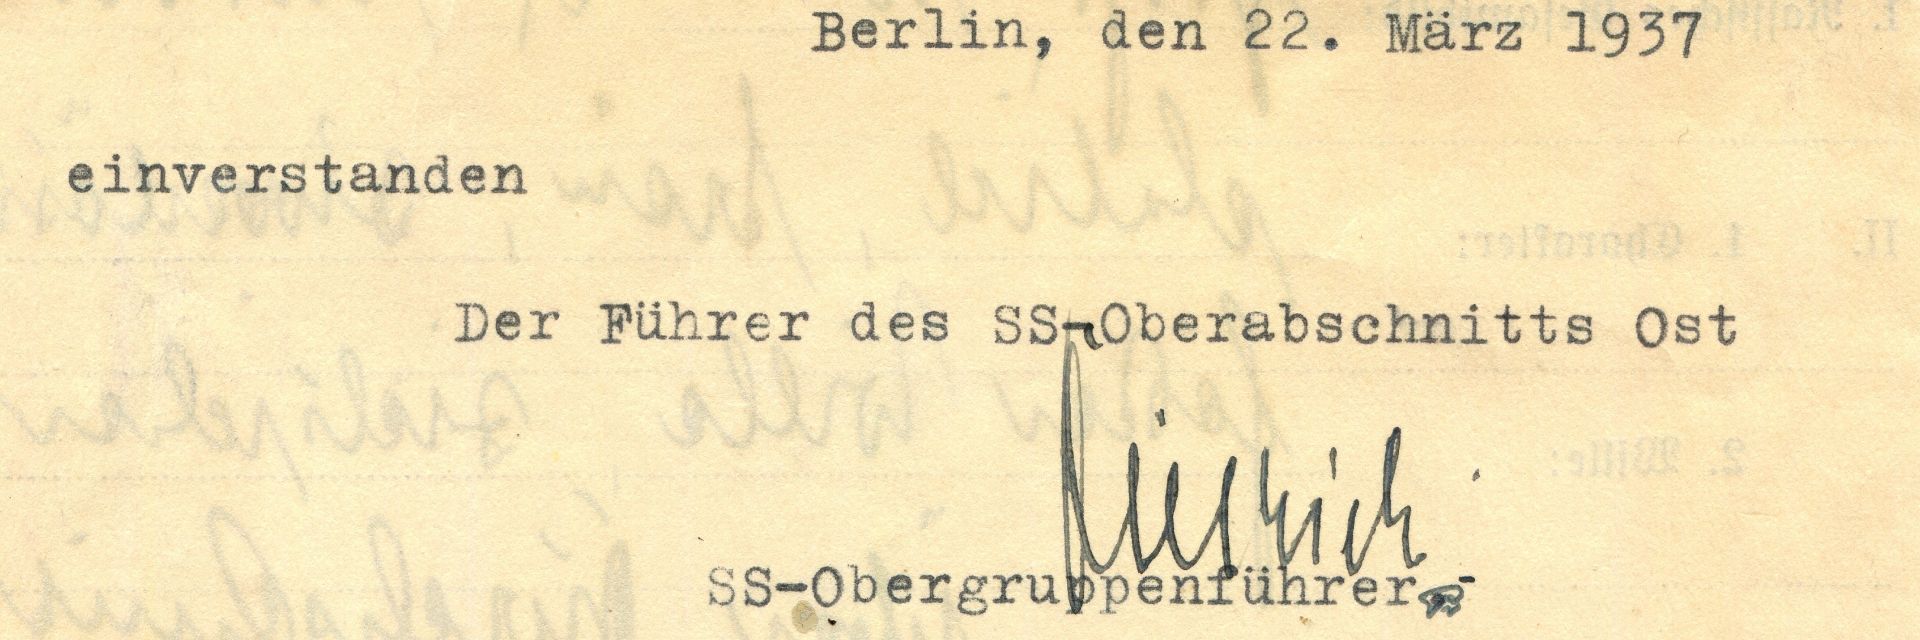 DIETRICH JOSEF 'SEPP': (1892-1966) German politician and SS-Oberst-Gruppenfuhrer and Generaloberst - Image 2 of 2